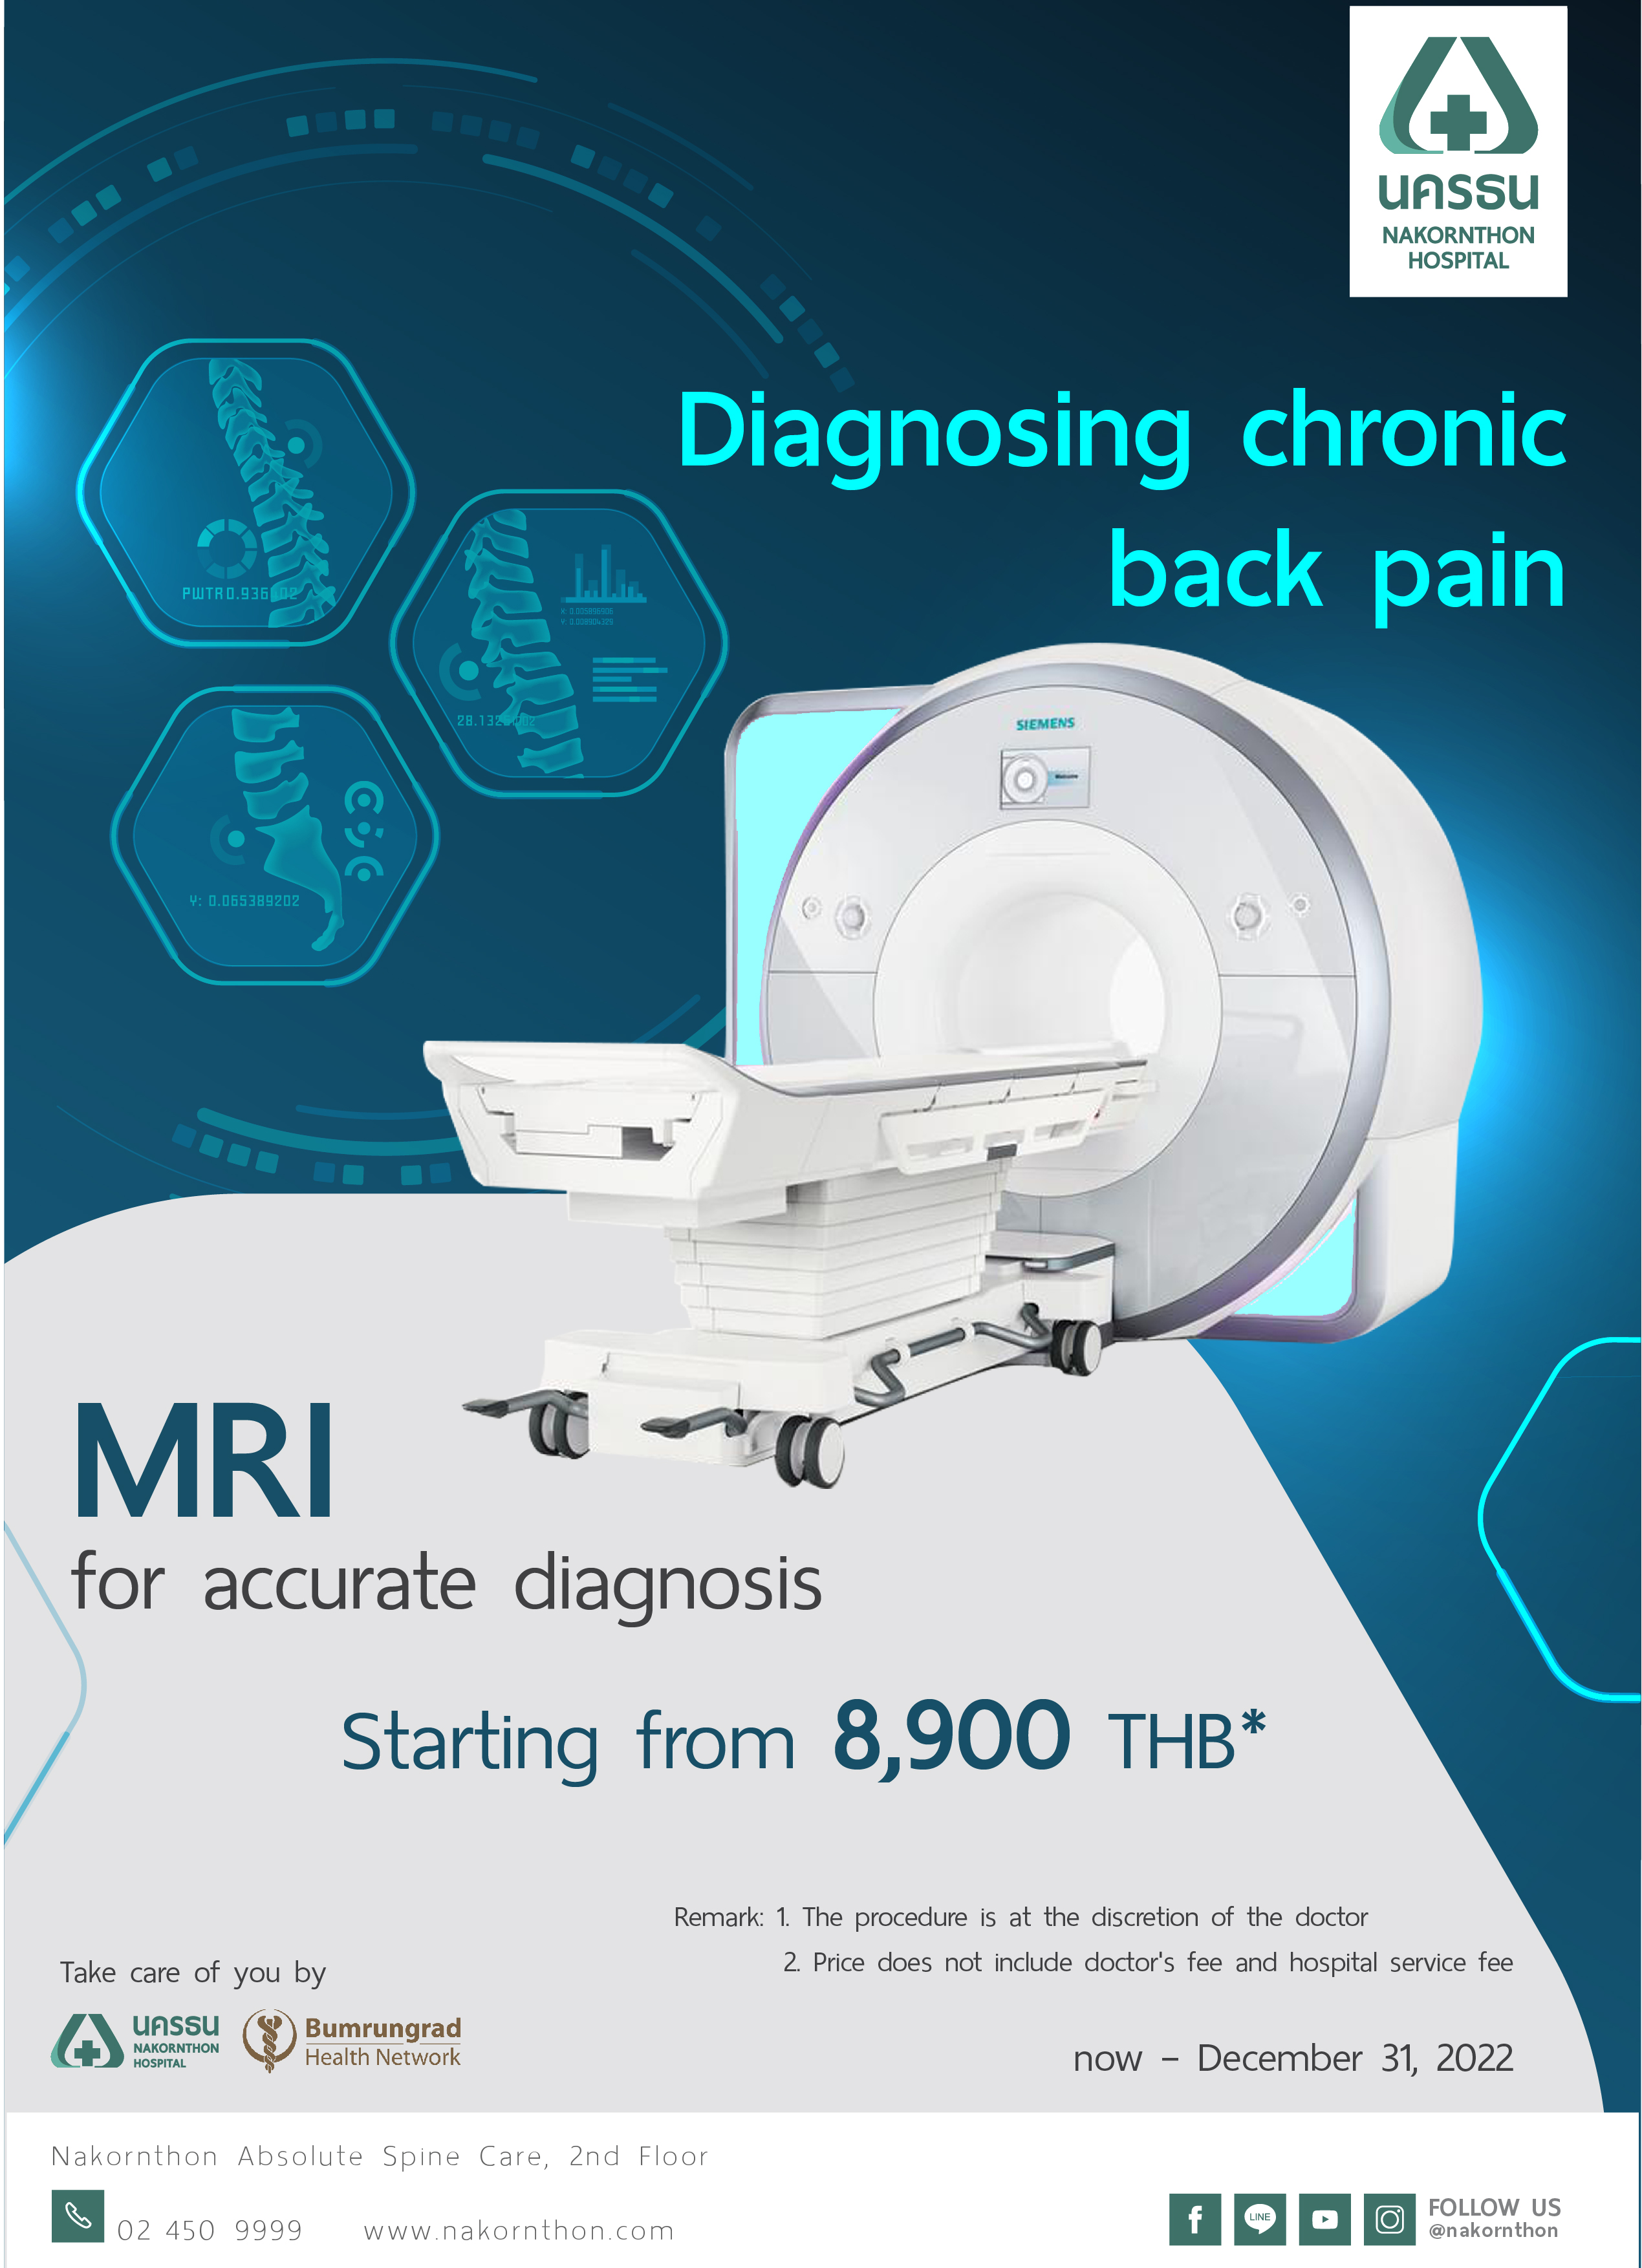 Diagnosing chronic back pain with MRI